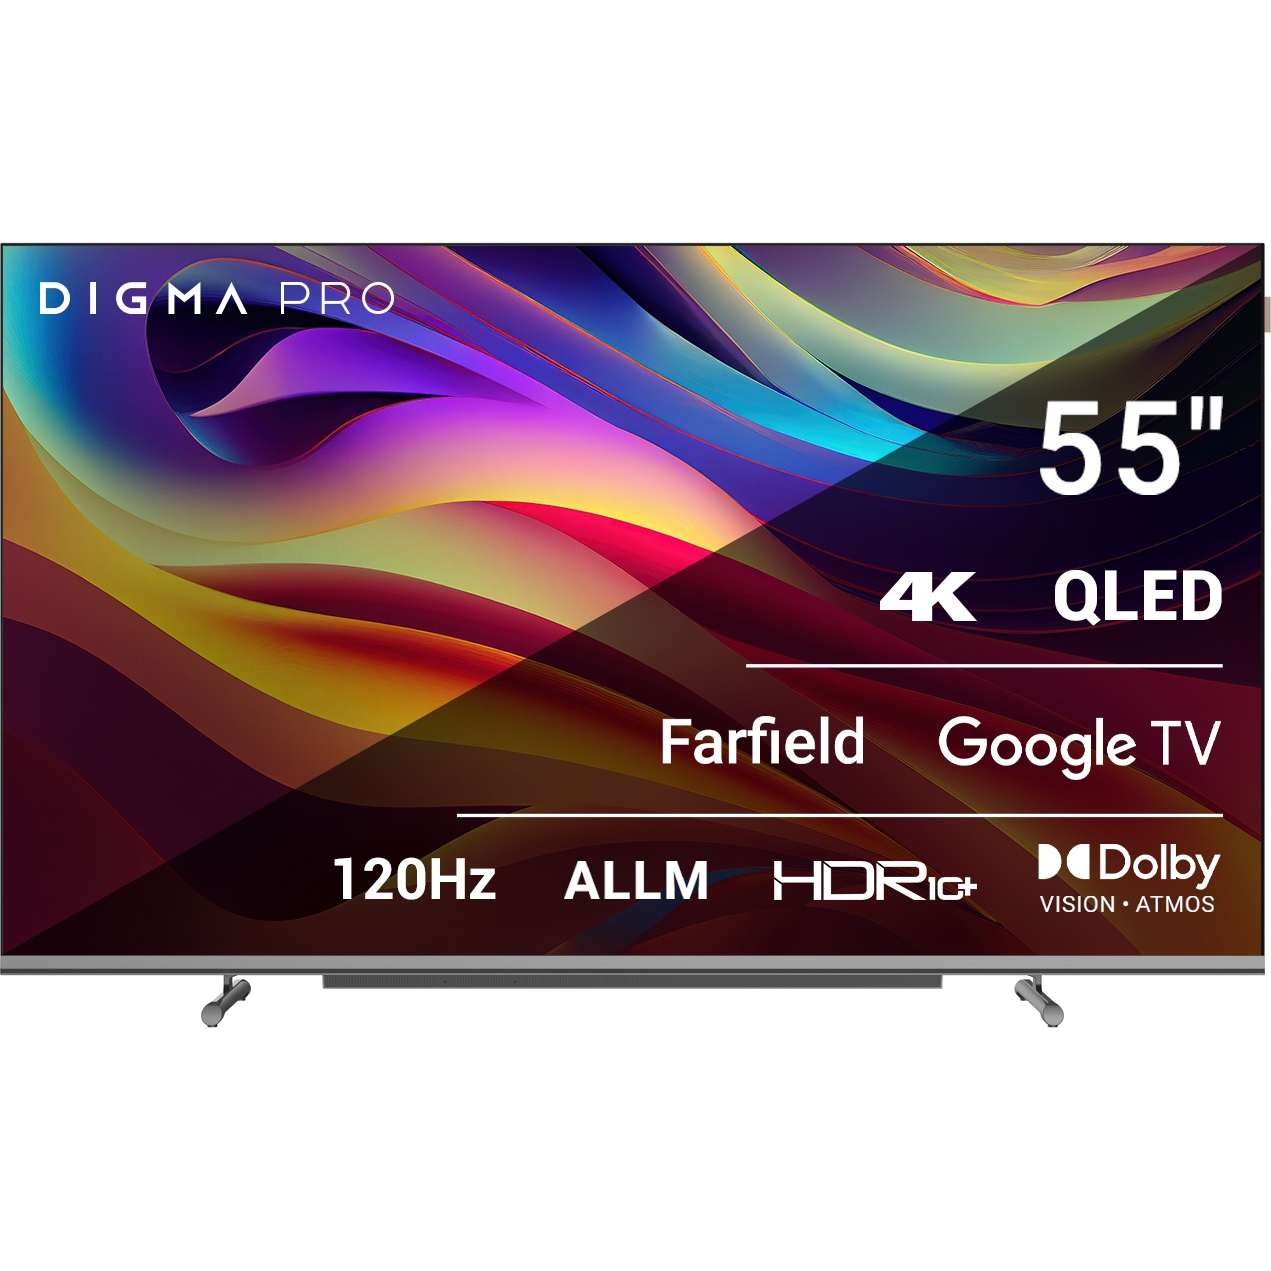 Телевизор Digma Pro 55 55L цена и фото